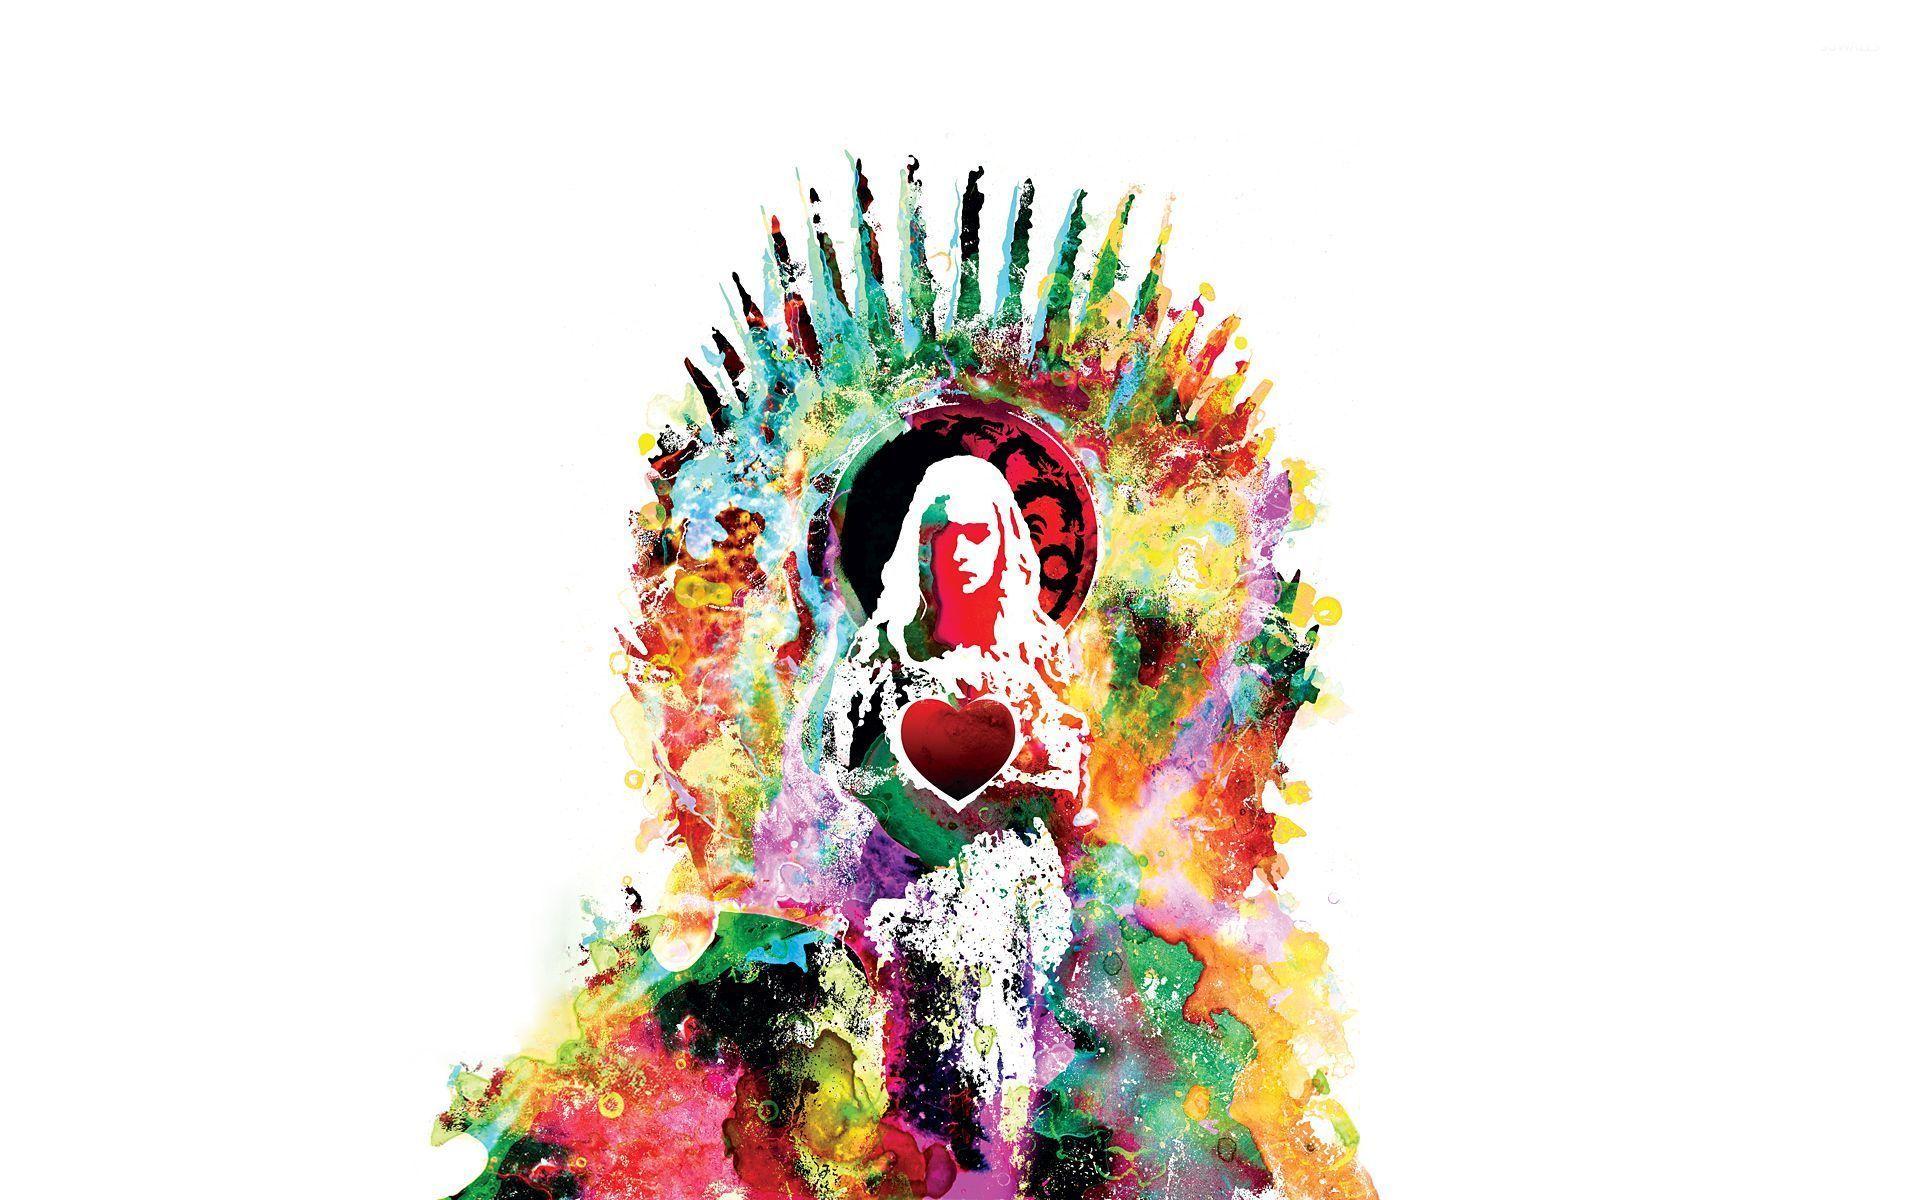 Daenerys on the Iron Throne wallpaper Show wallpaper